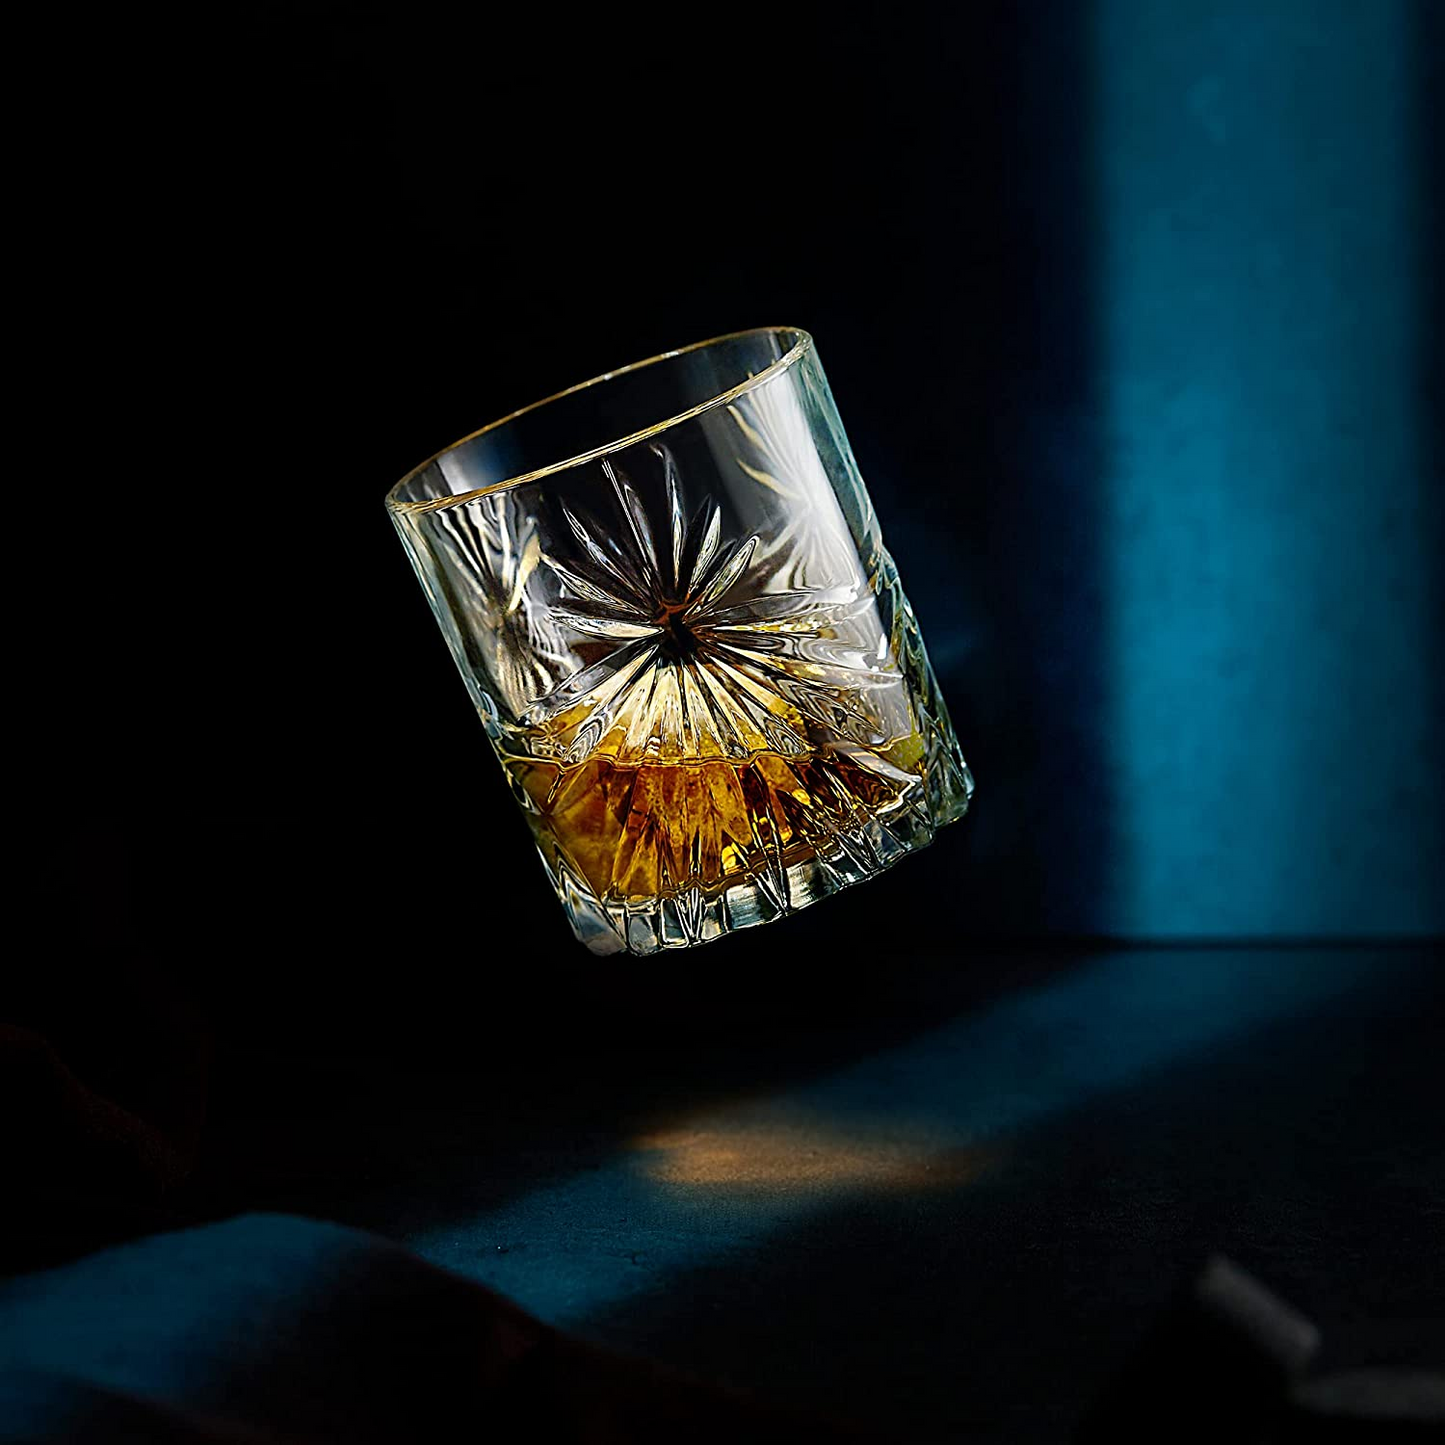 Crystal Whiskey Glasses - Set of 2 Soleil Glass Tumblers (10.7oz)